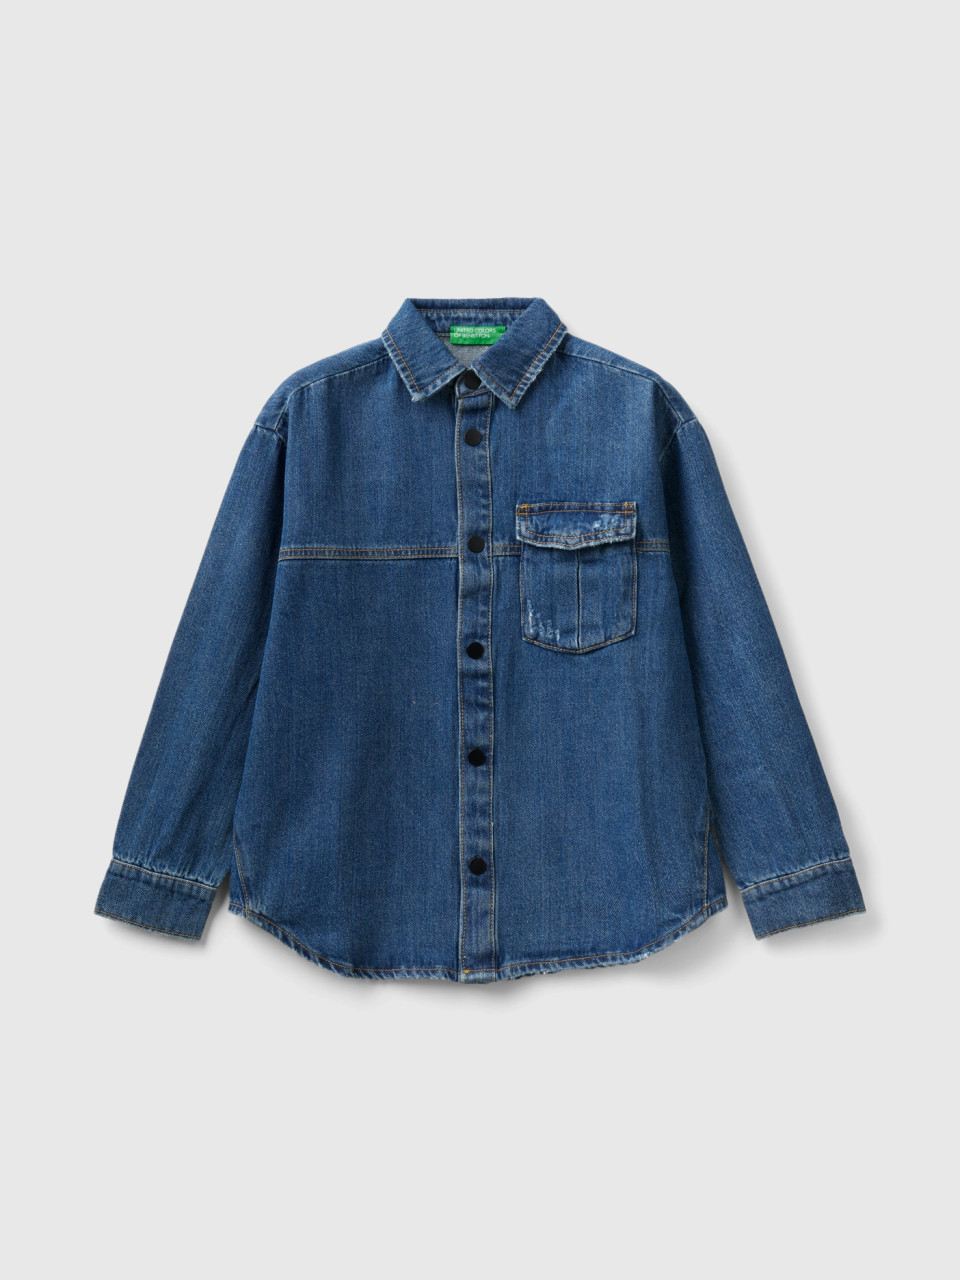 Benetton, Denim Shirt With Pocket, Blue, Kids